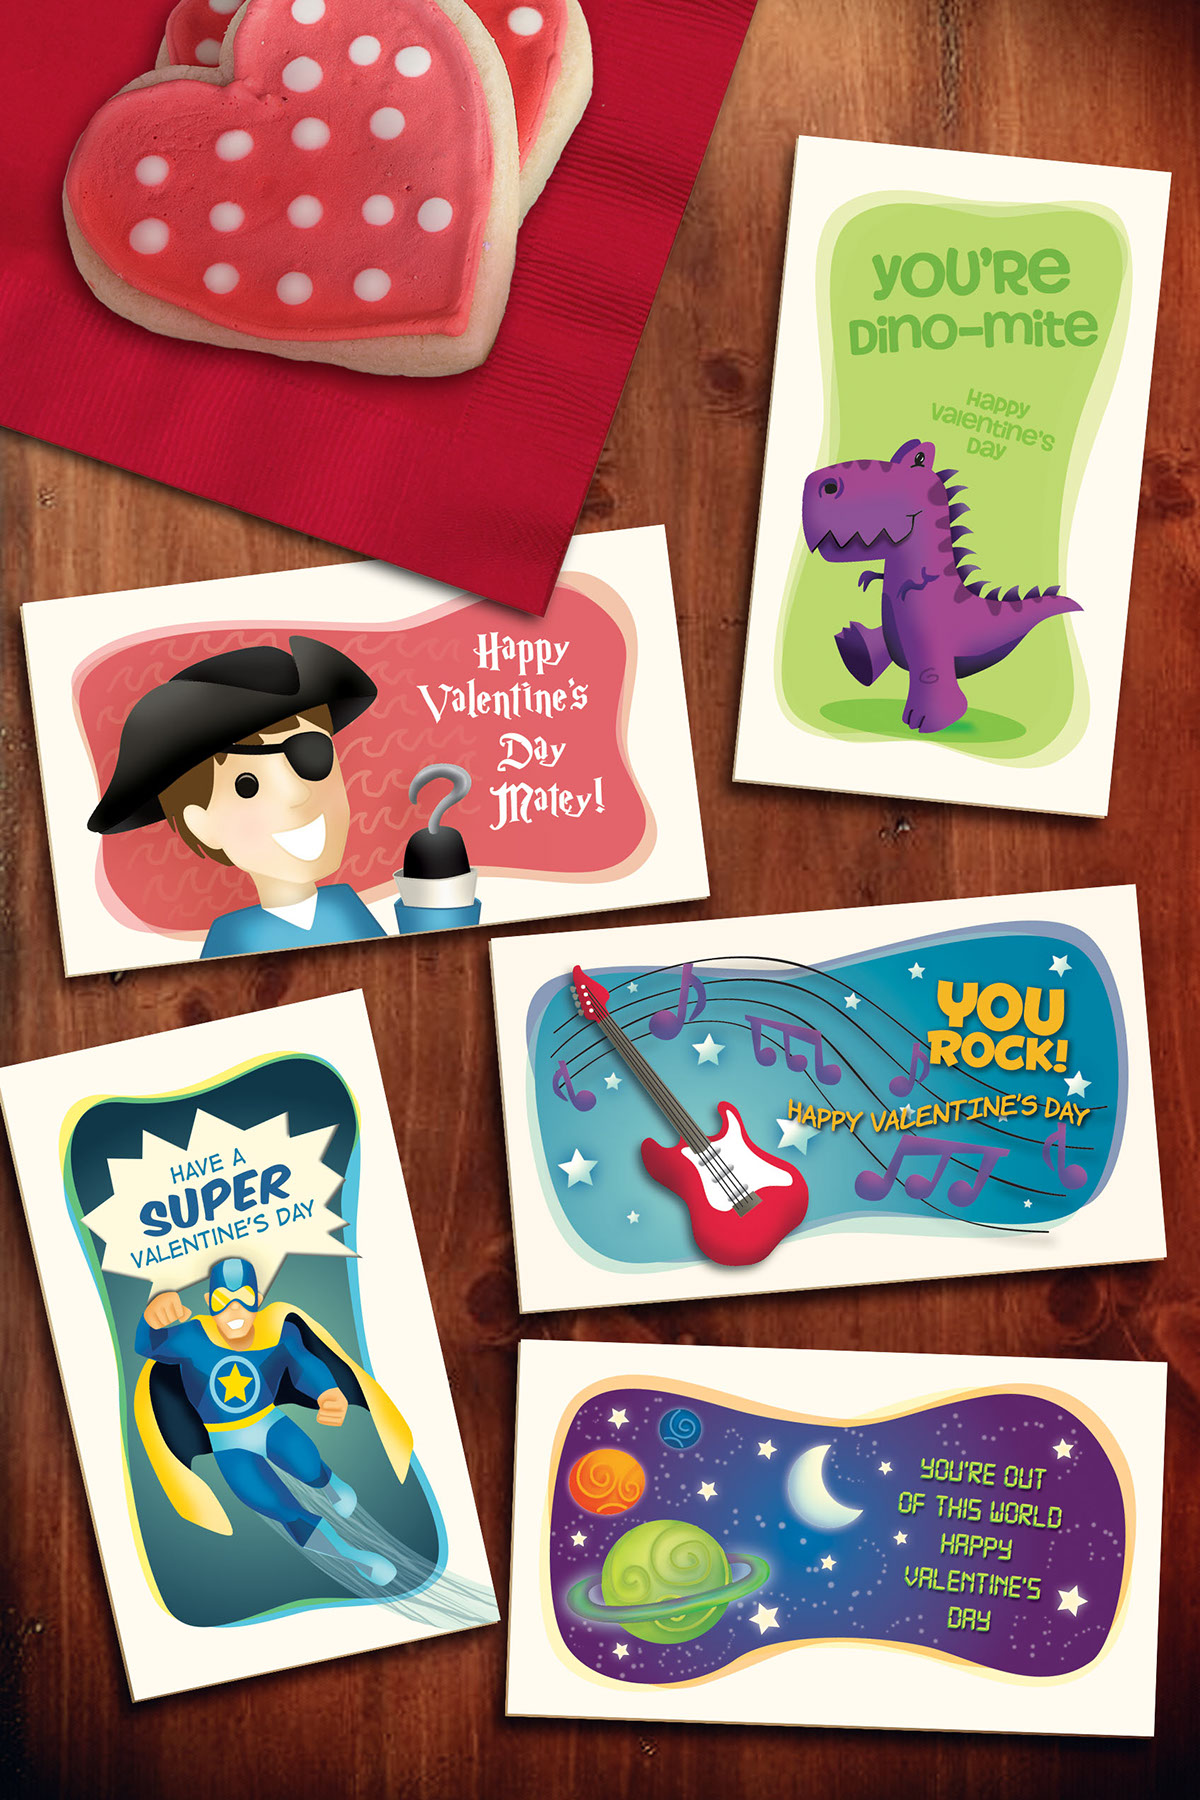 Valentine's cards greeting Valentine's Day